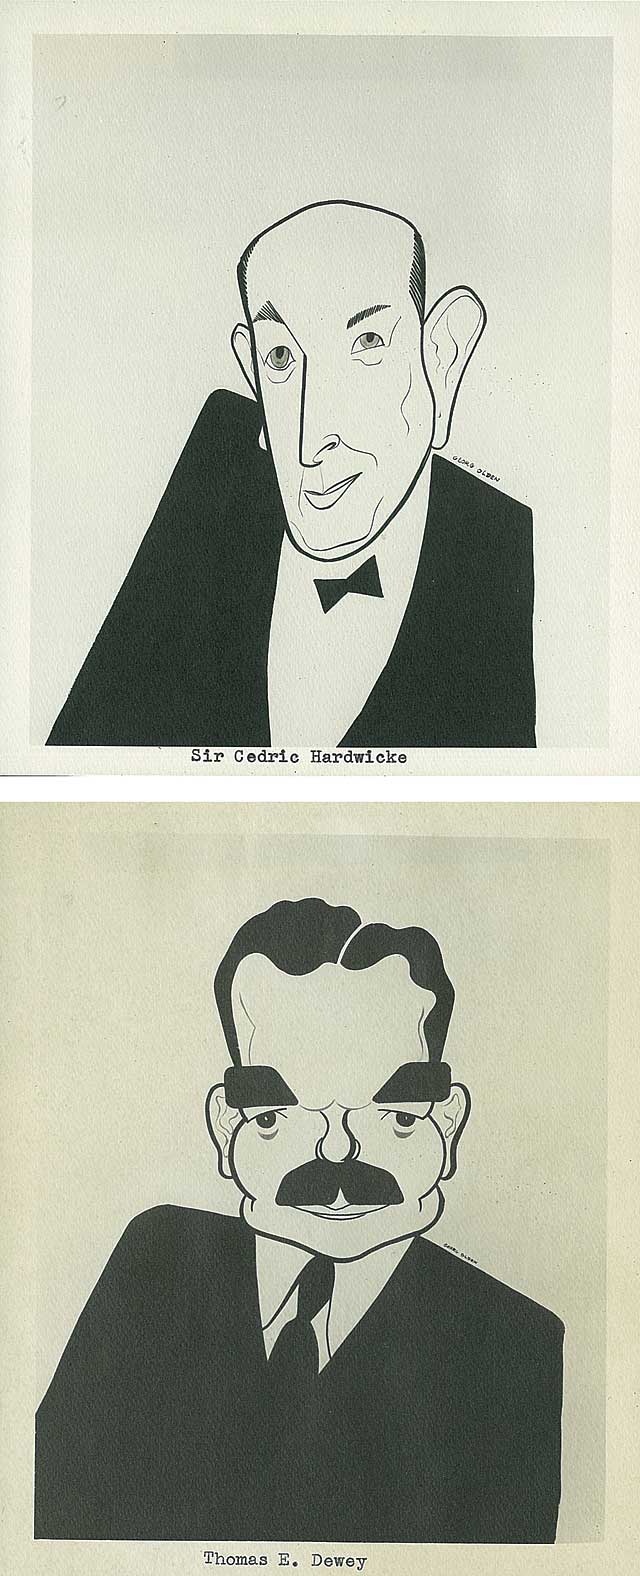 Caricatures: Cedric Hardwicke and Thomas Dewey